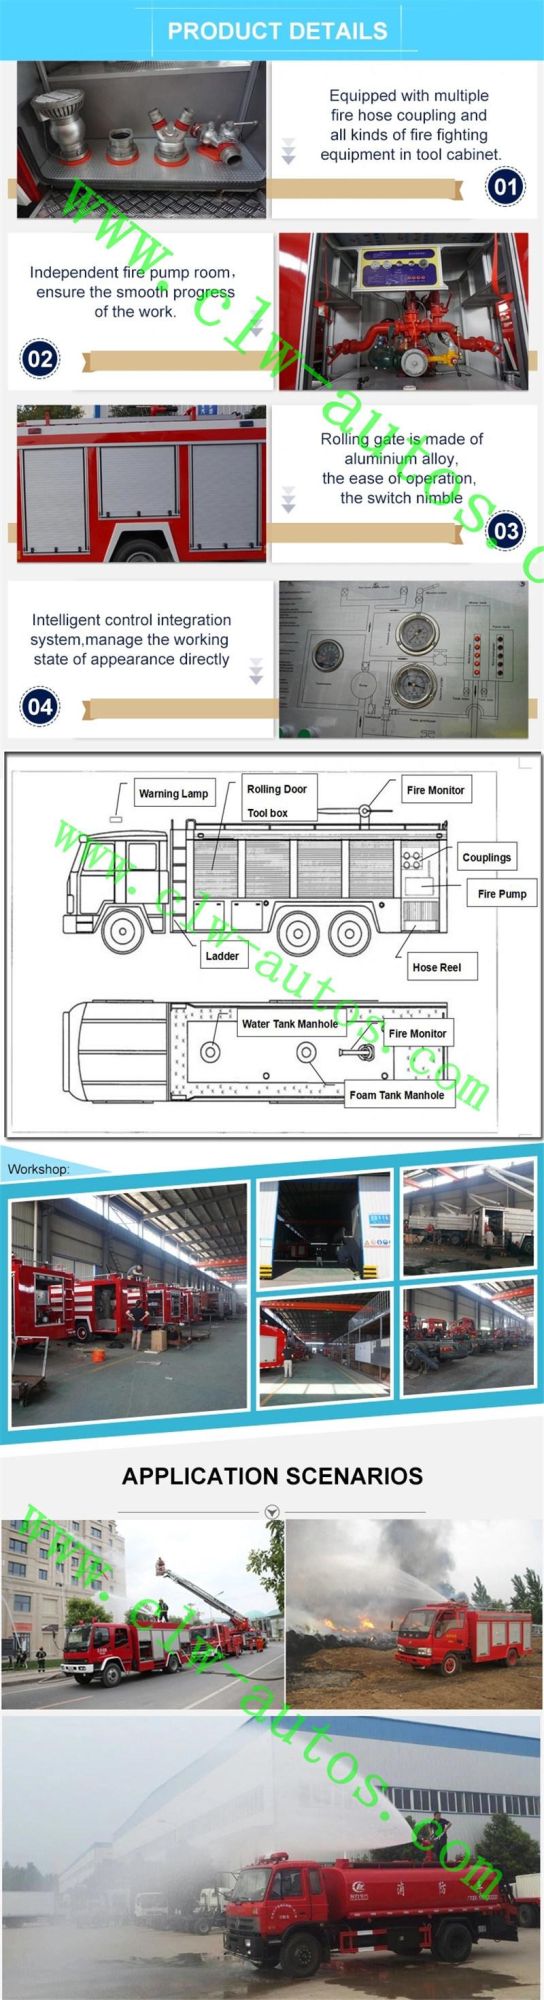 Dongfeng 153model 4X2 6000liters 6cbm Water Tank Fire Fighting Truck